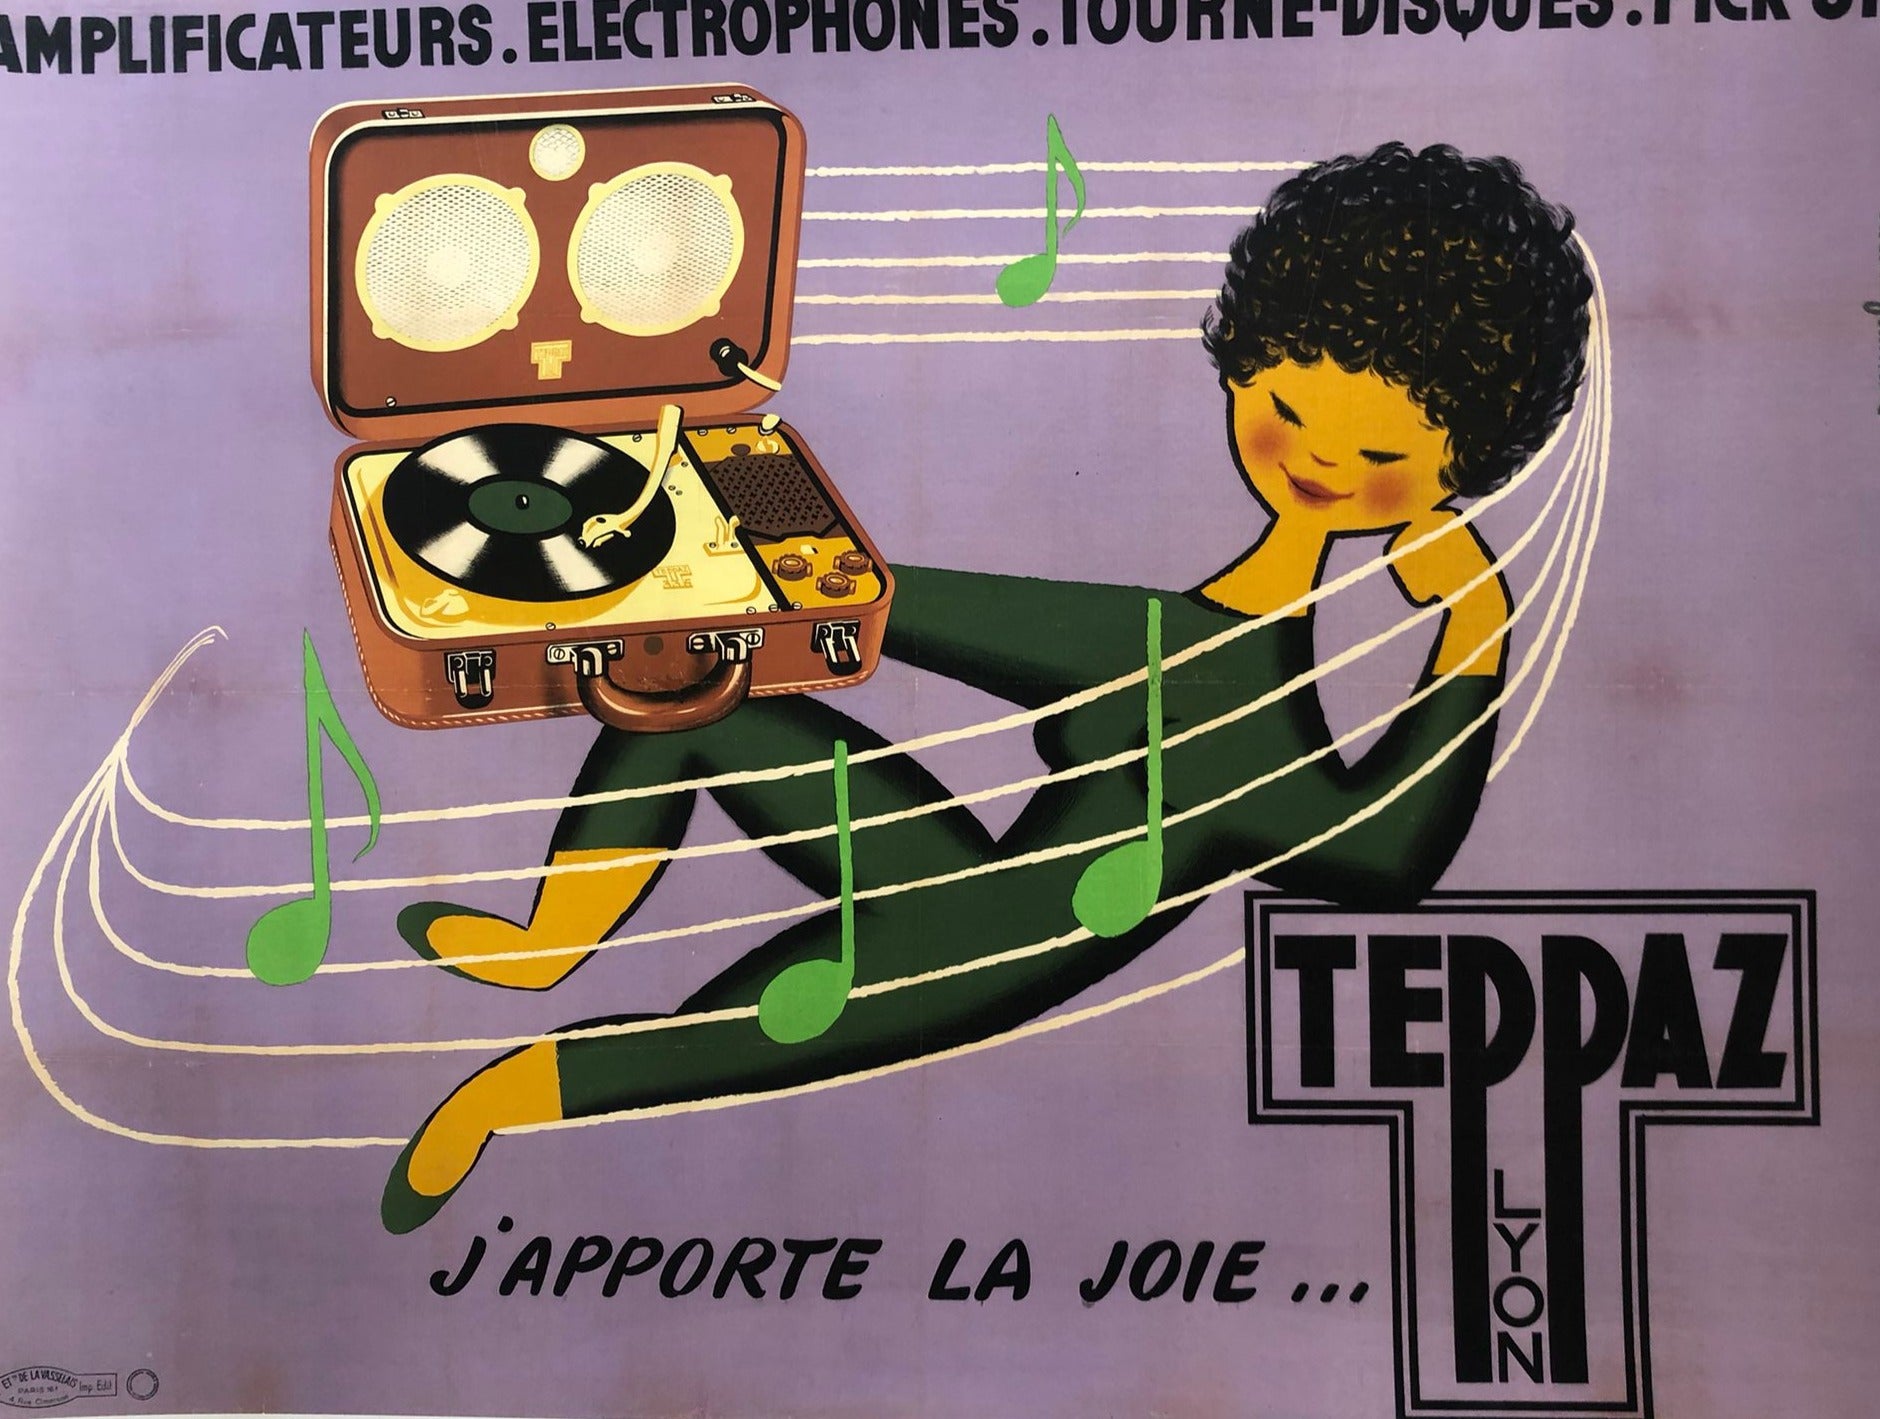 Teppaz Radio Advertisement by Alain Gauthier